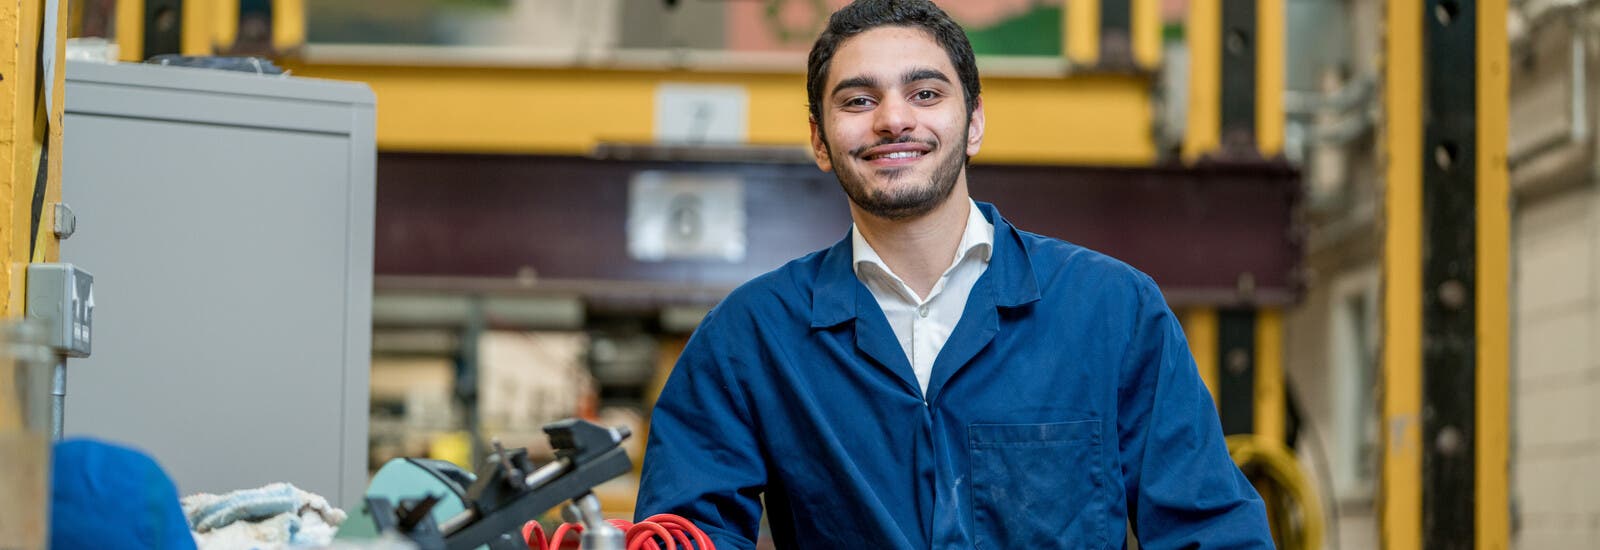 Engineering student smiling at camera